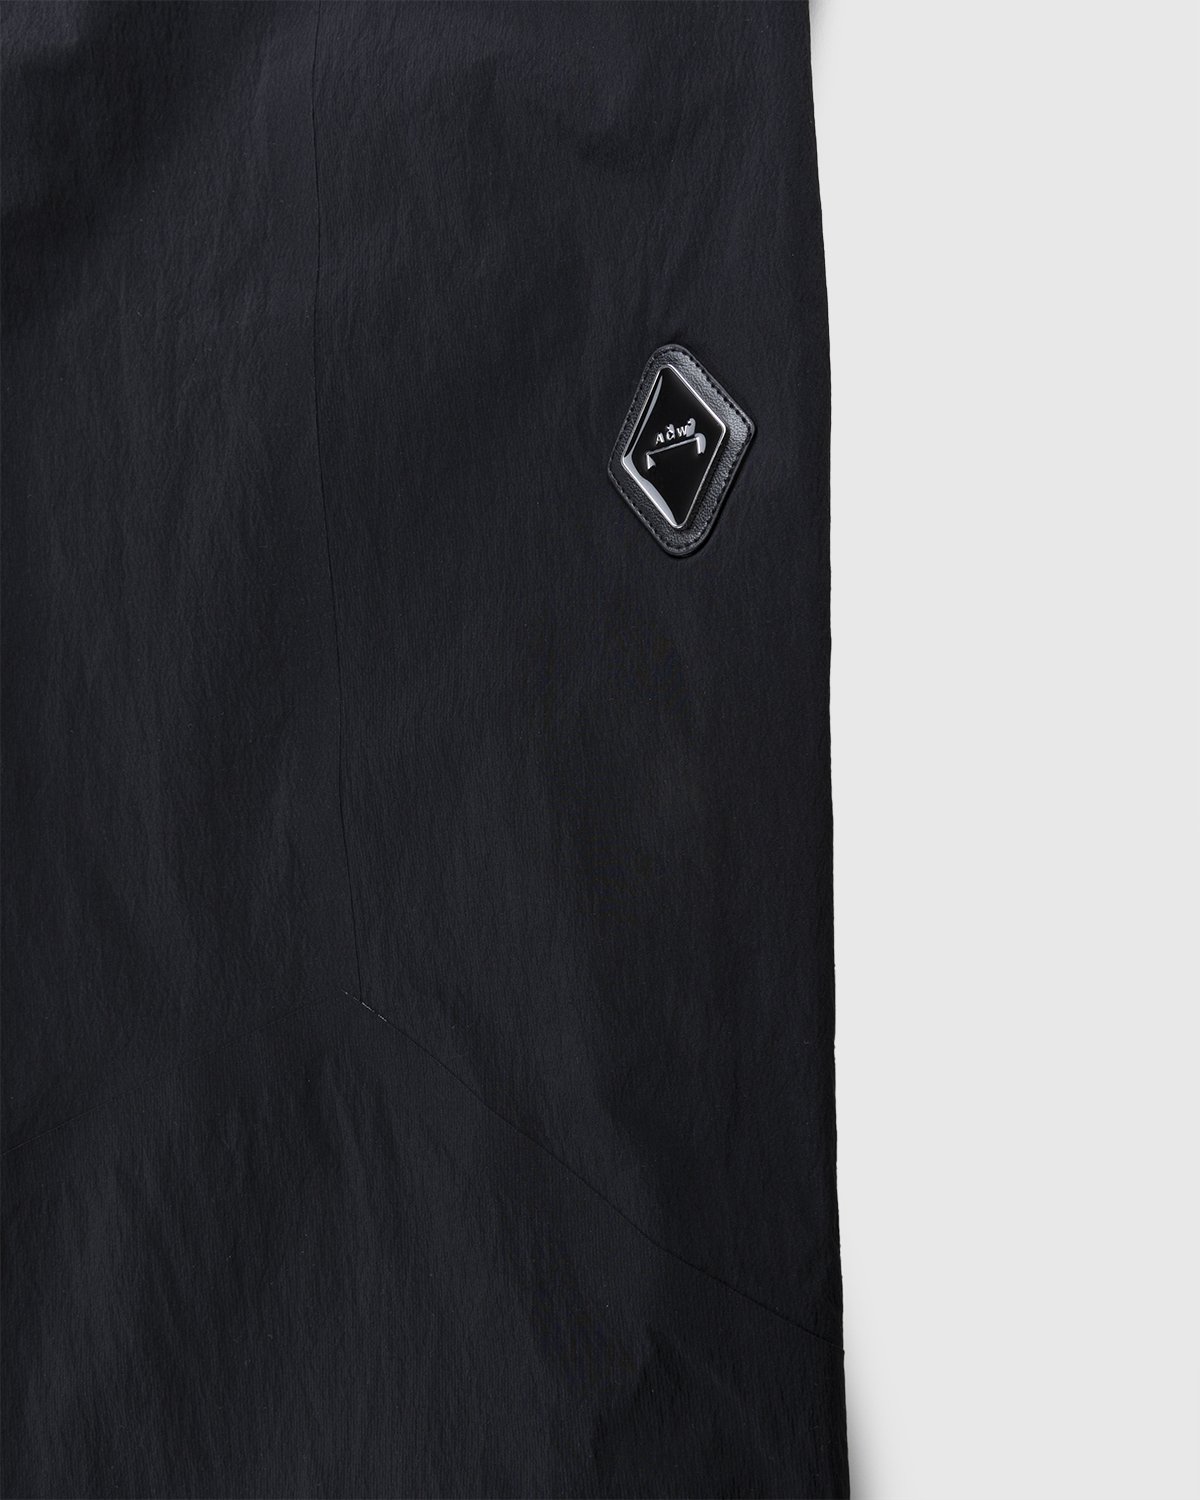 A-Cold-Wall* - Stealth Nylon Pants Black - Clothing - Black - Image 5